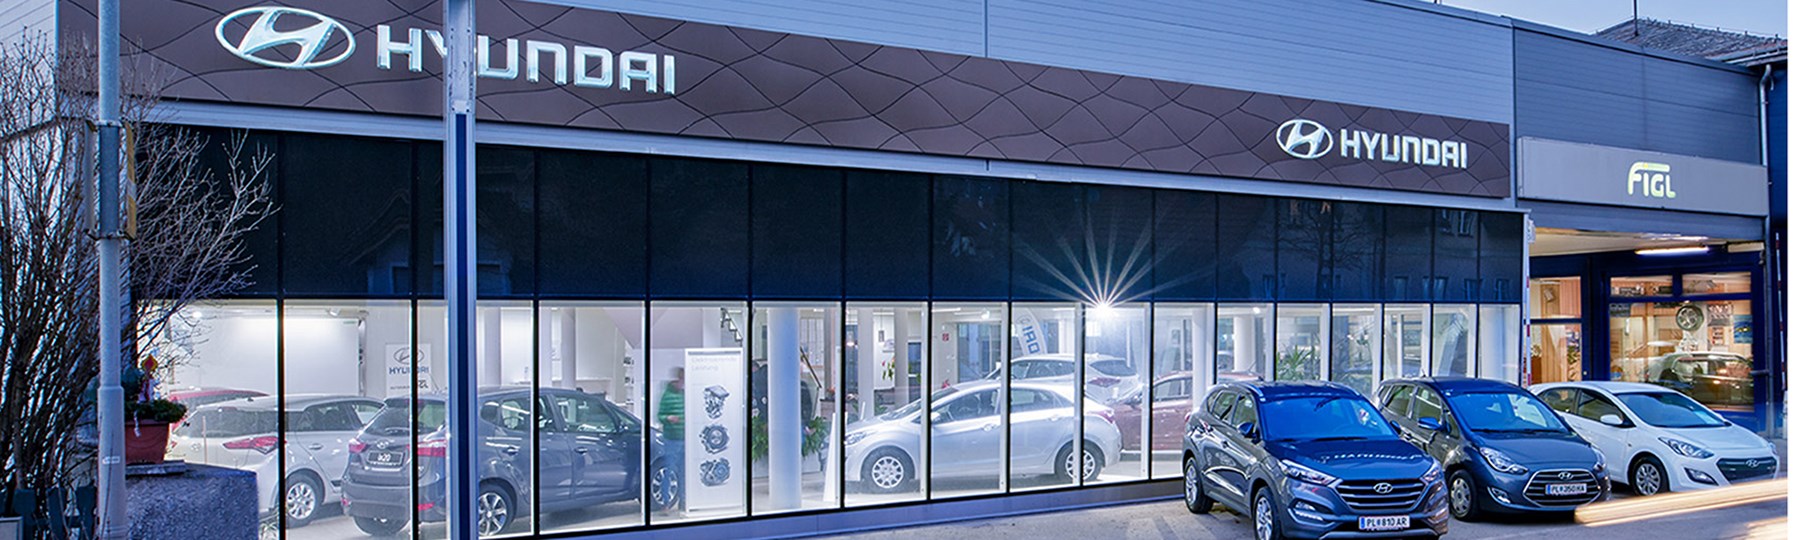 Autohaus Neulengbach Figl-Hyundai Aussenaufnahme-angepasst